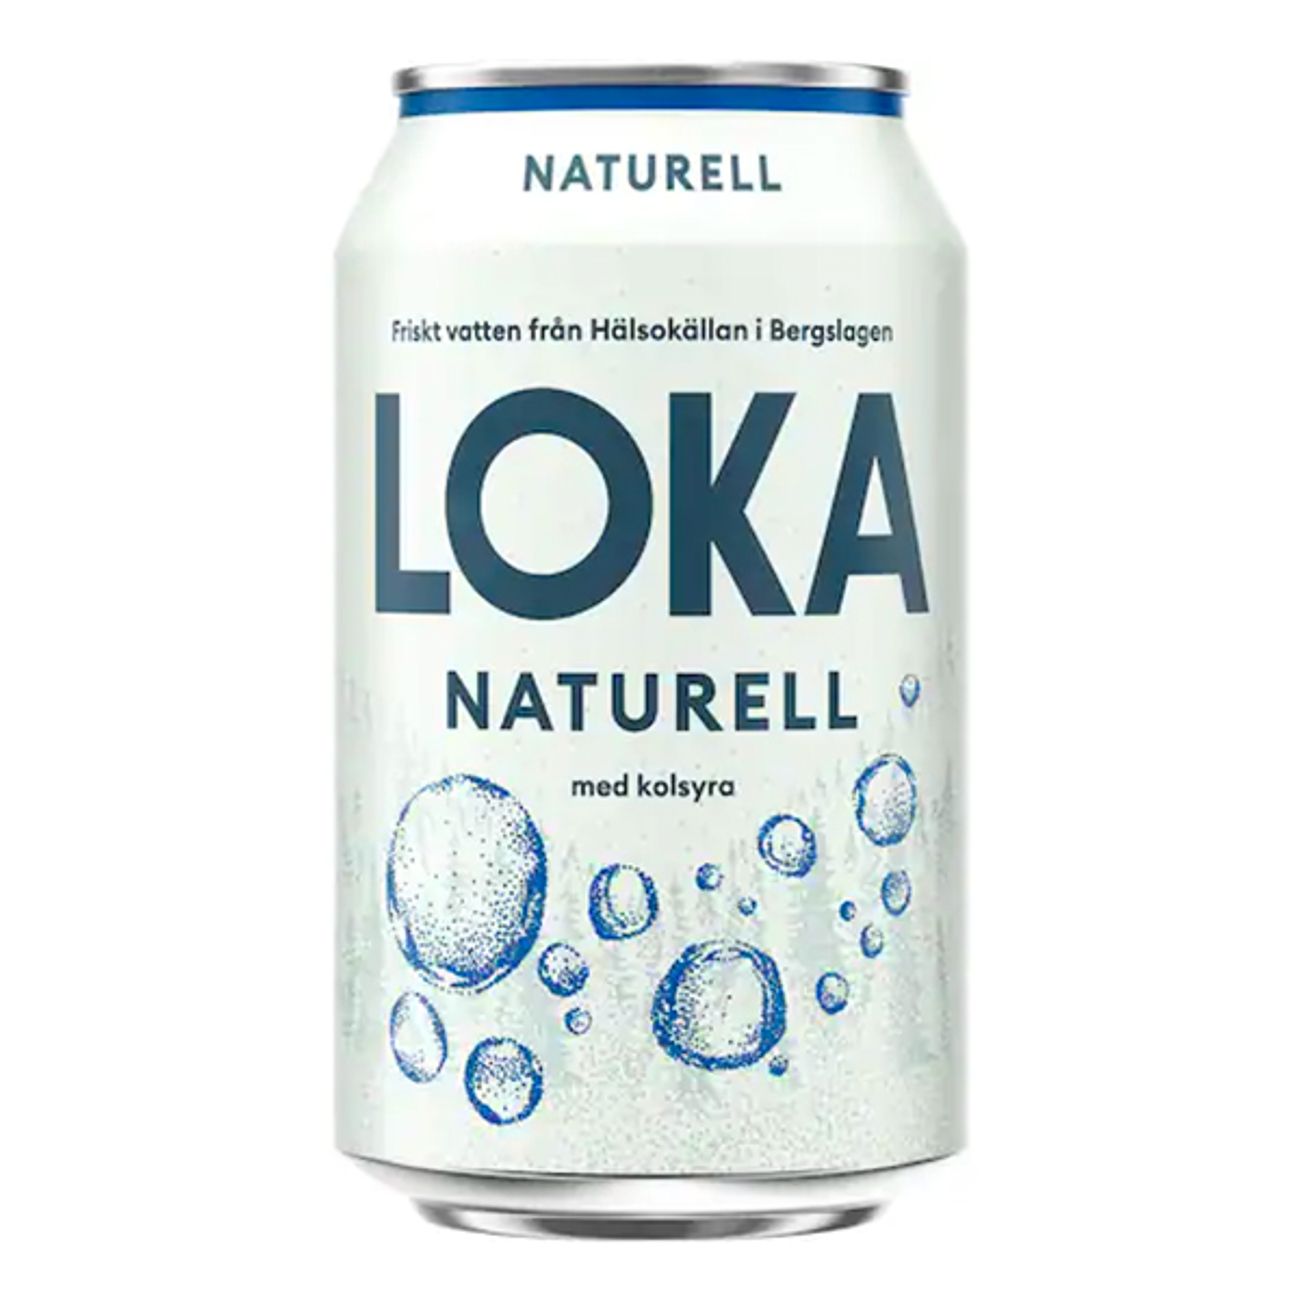 loka-naturell-77163-1